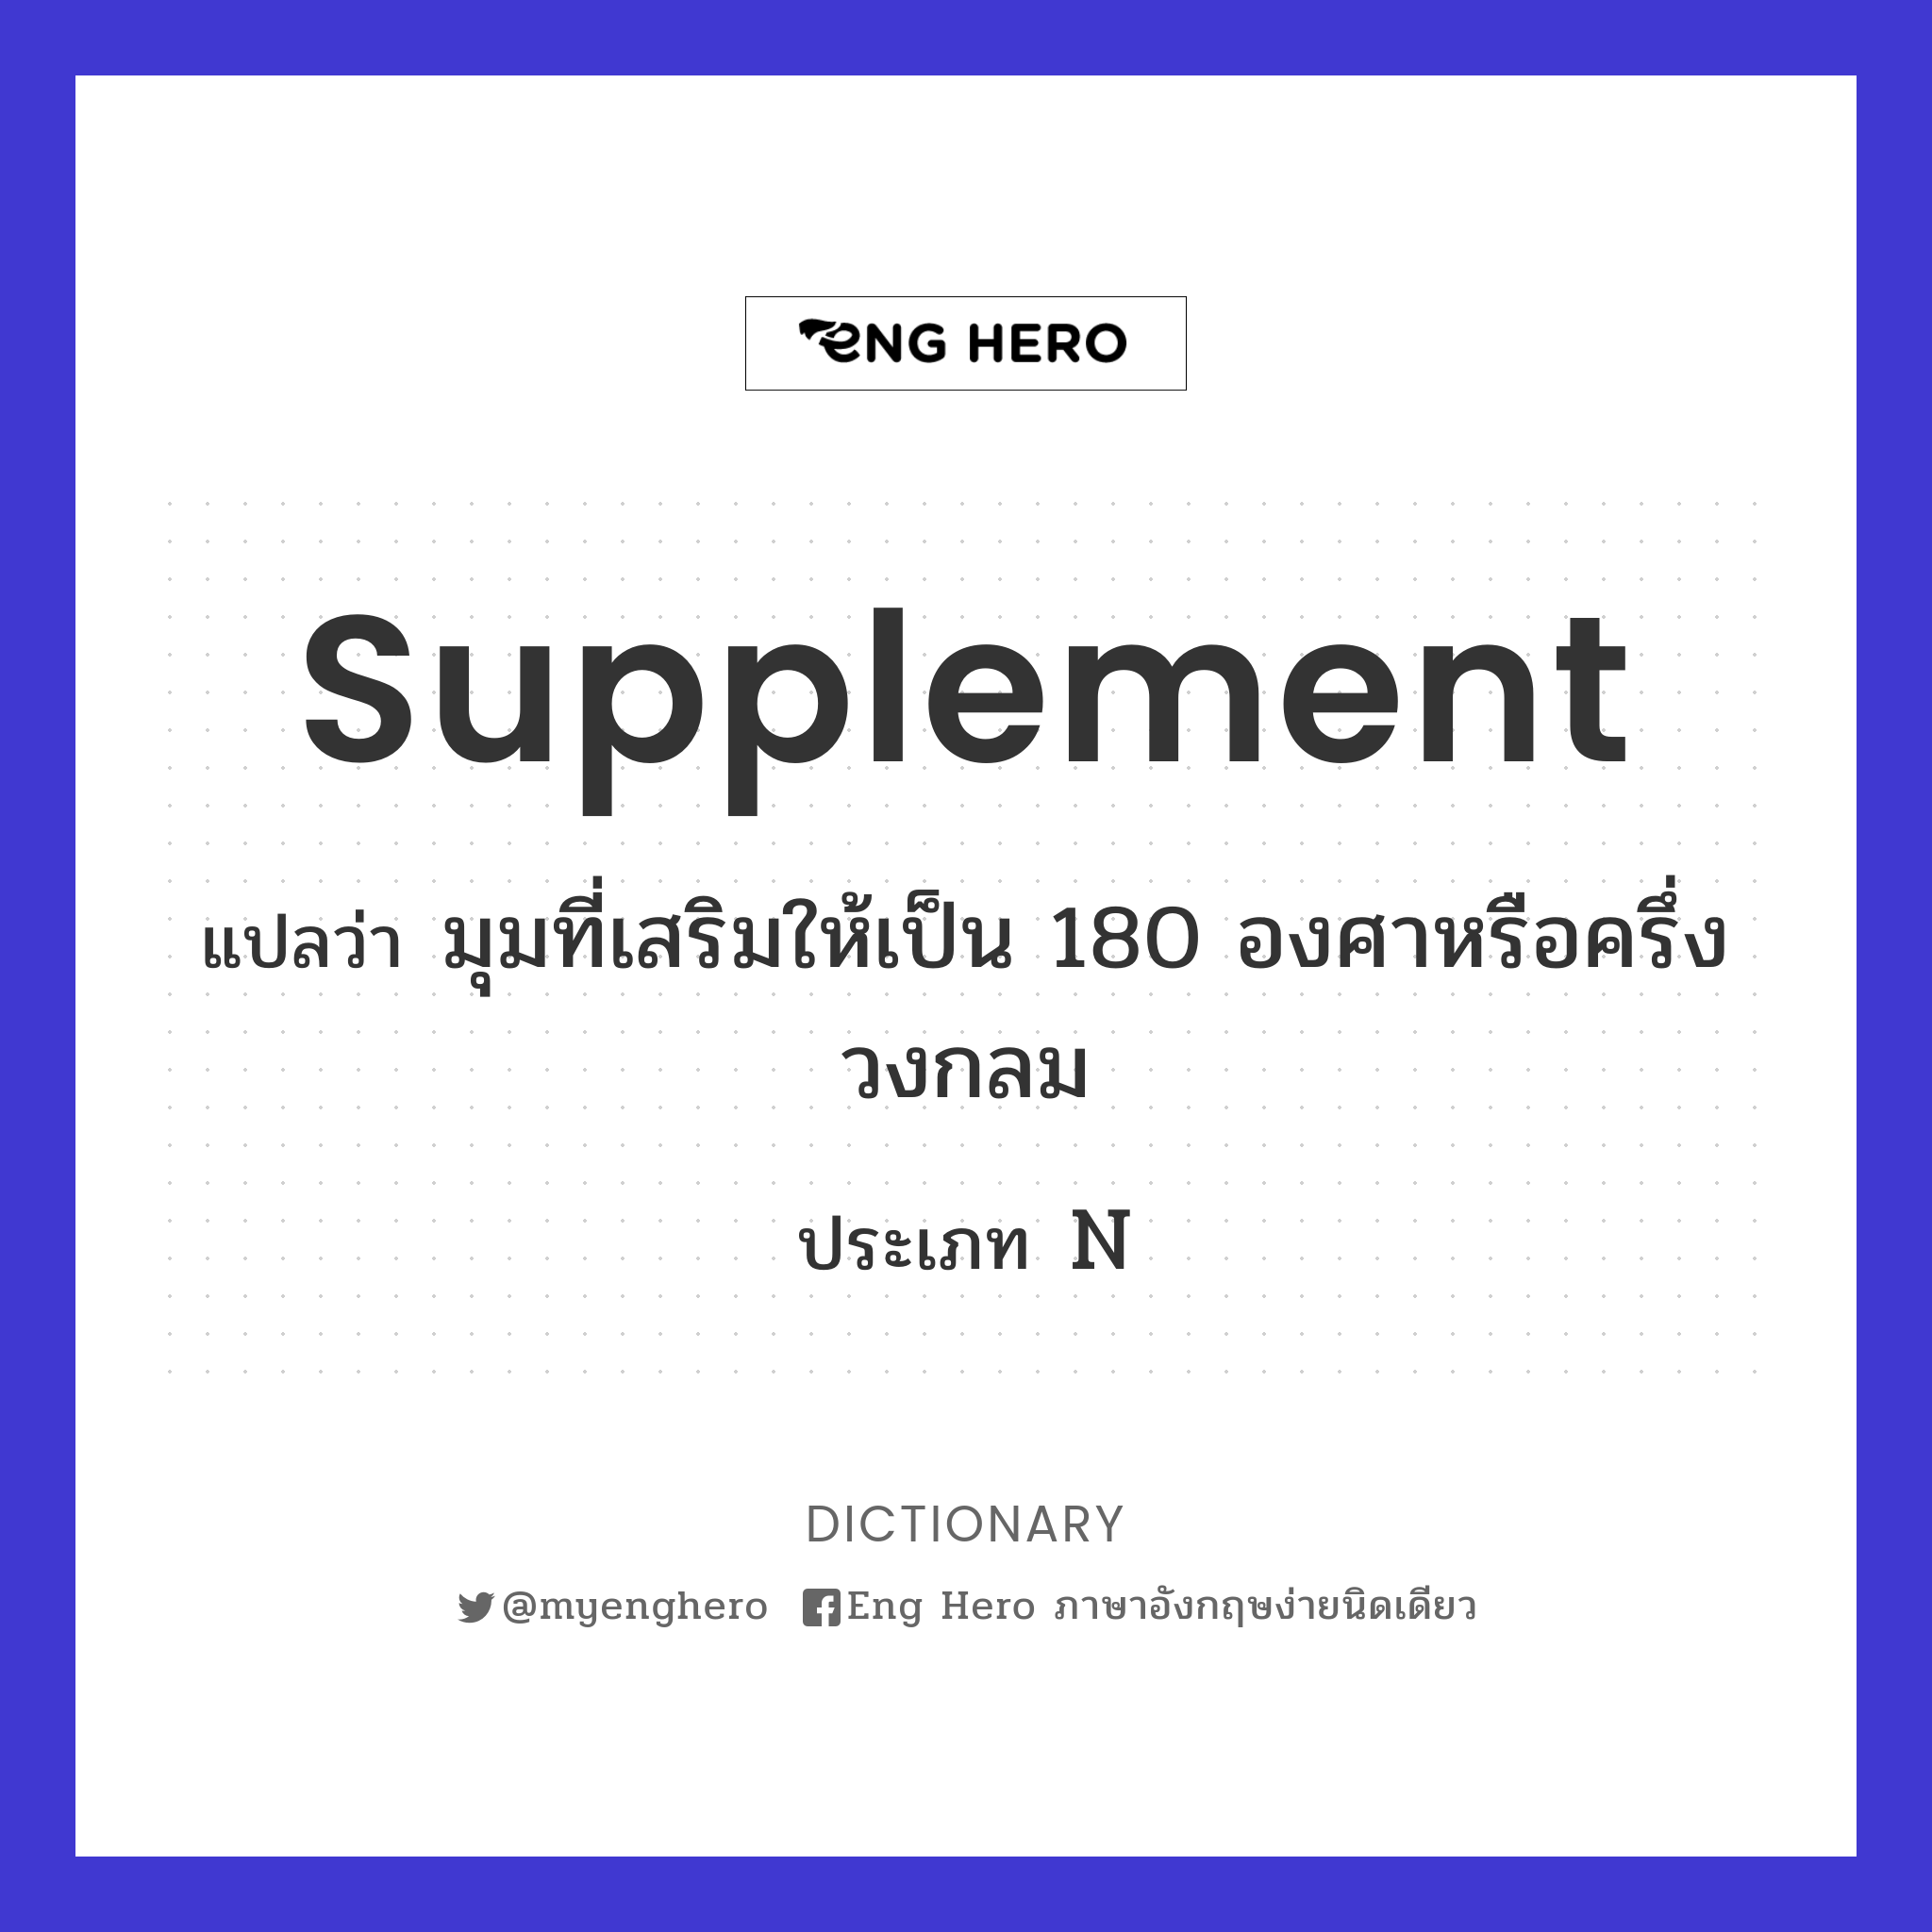 supplement